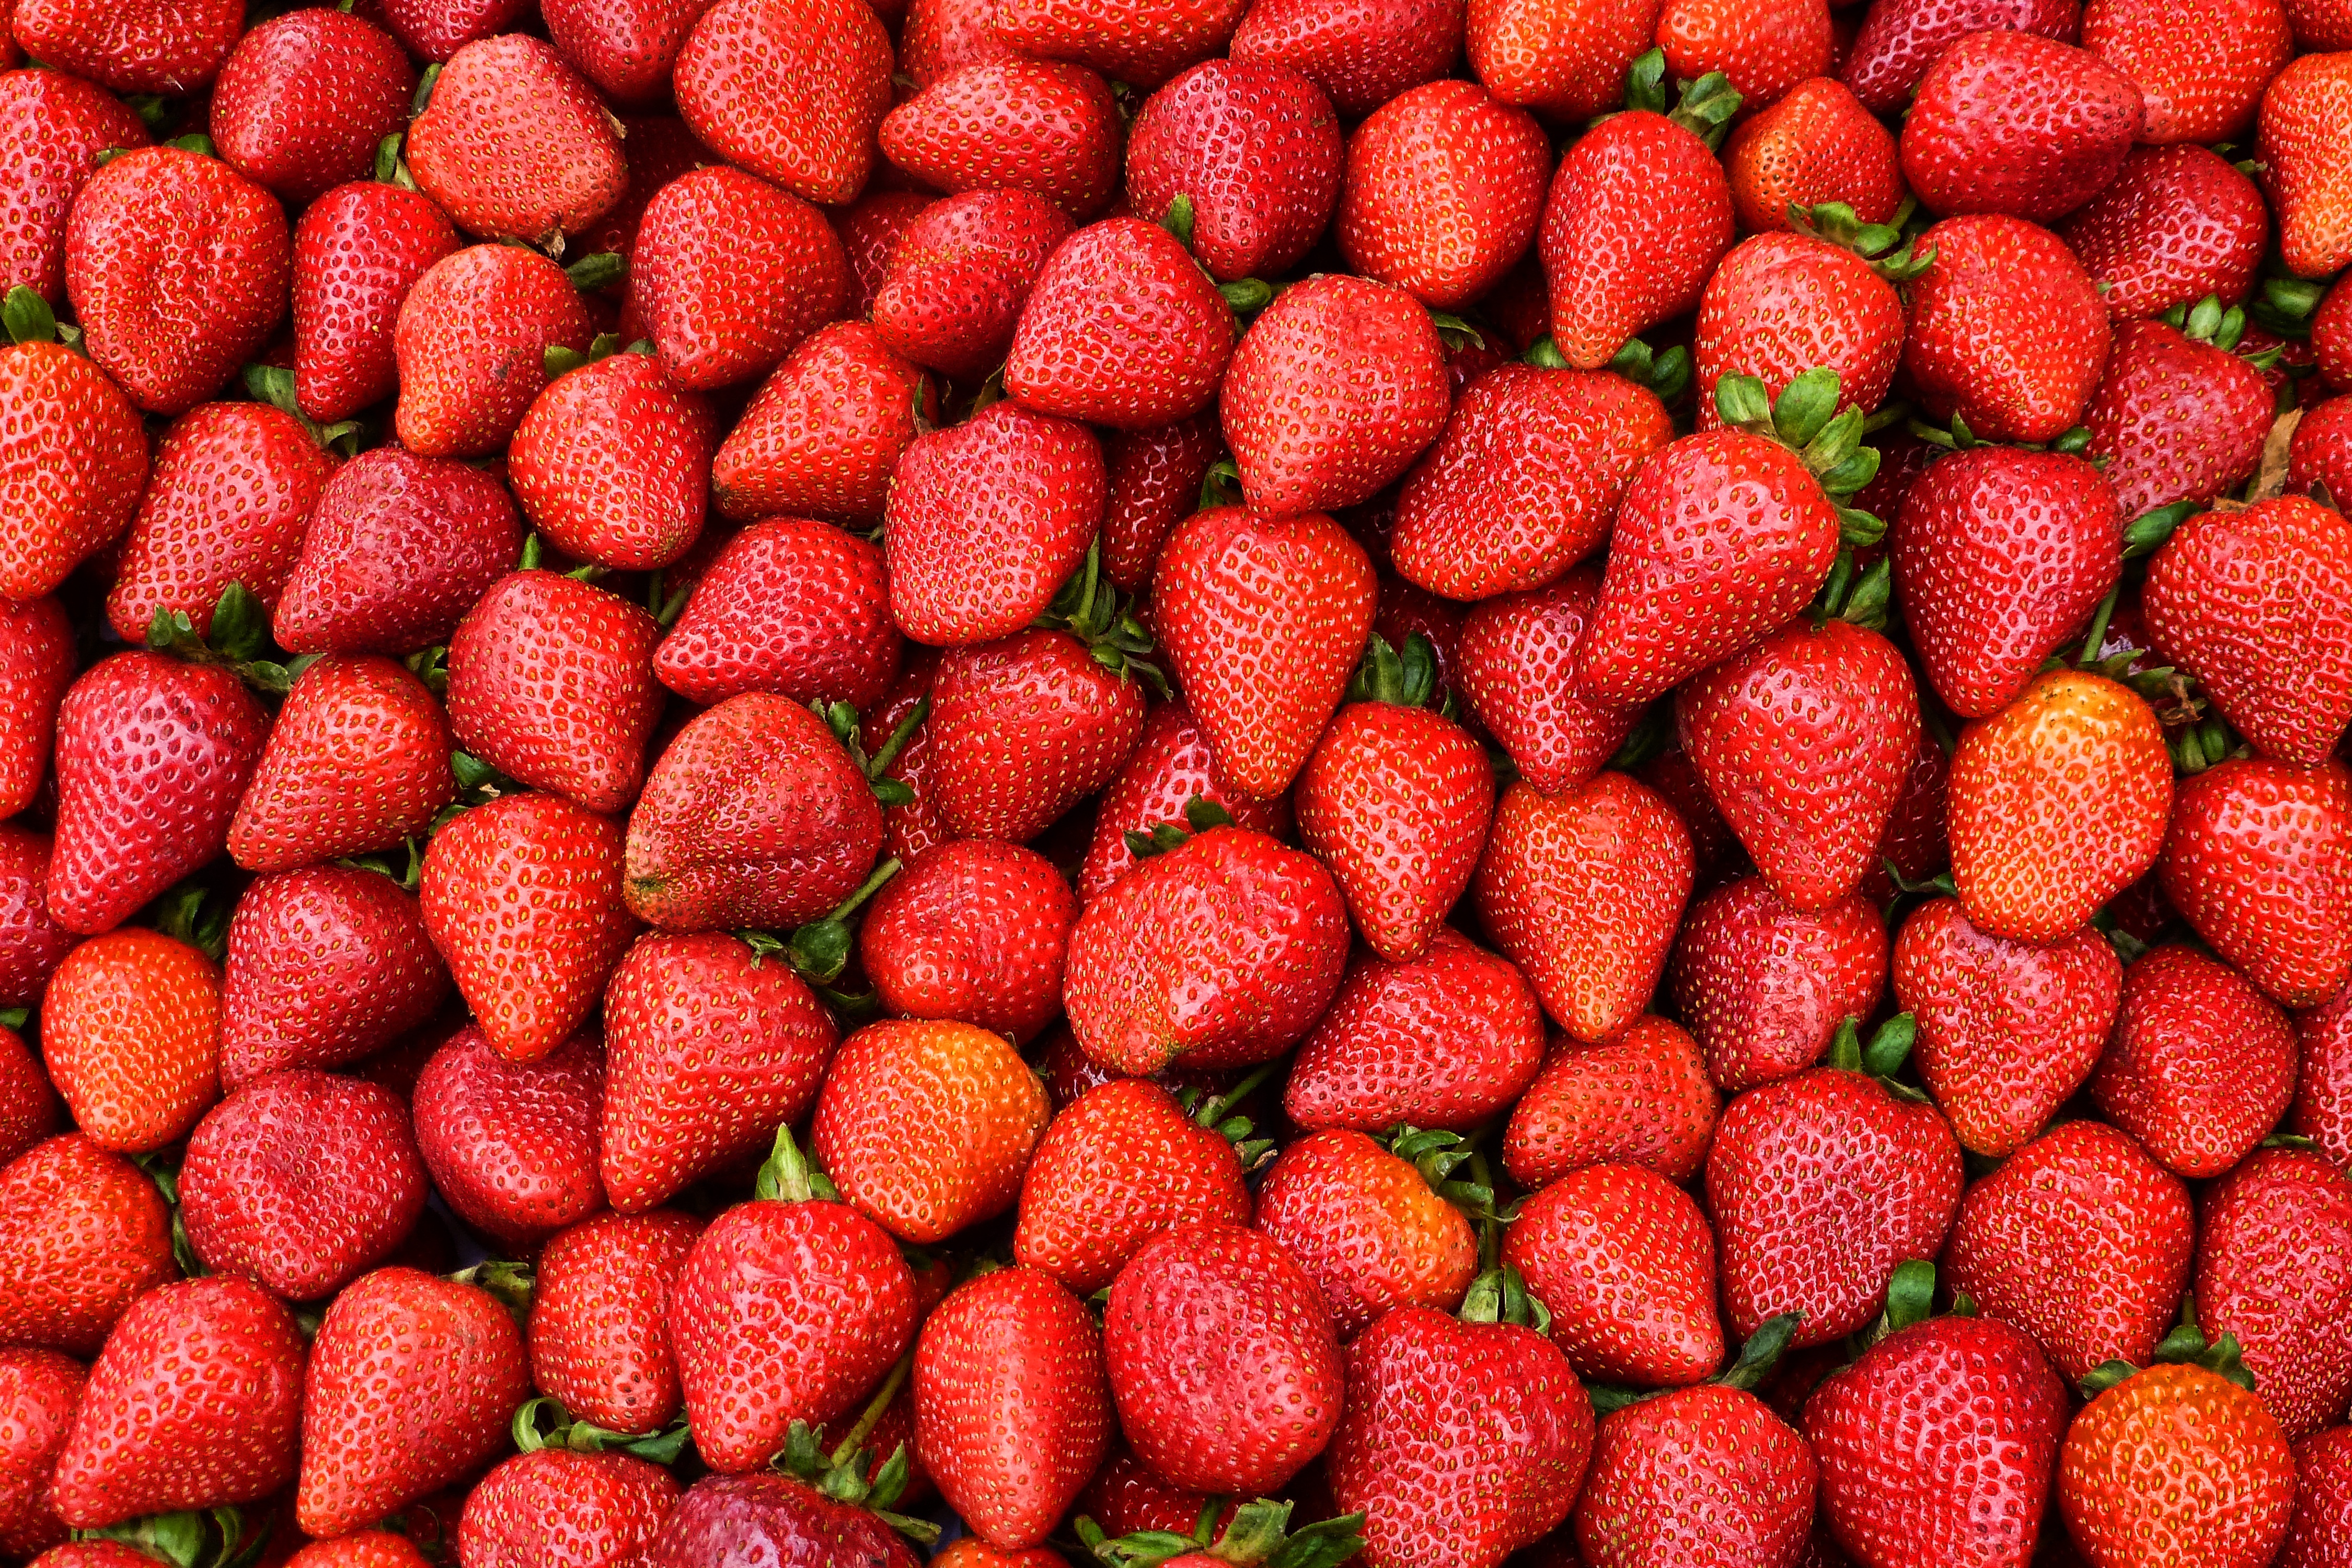 Strawberry141 Strawberry141 Chaturbate